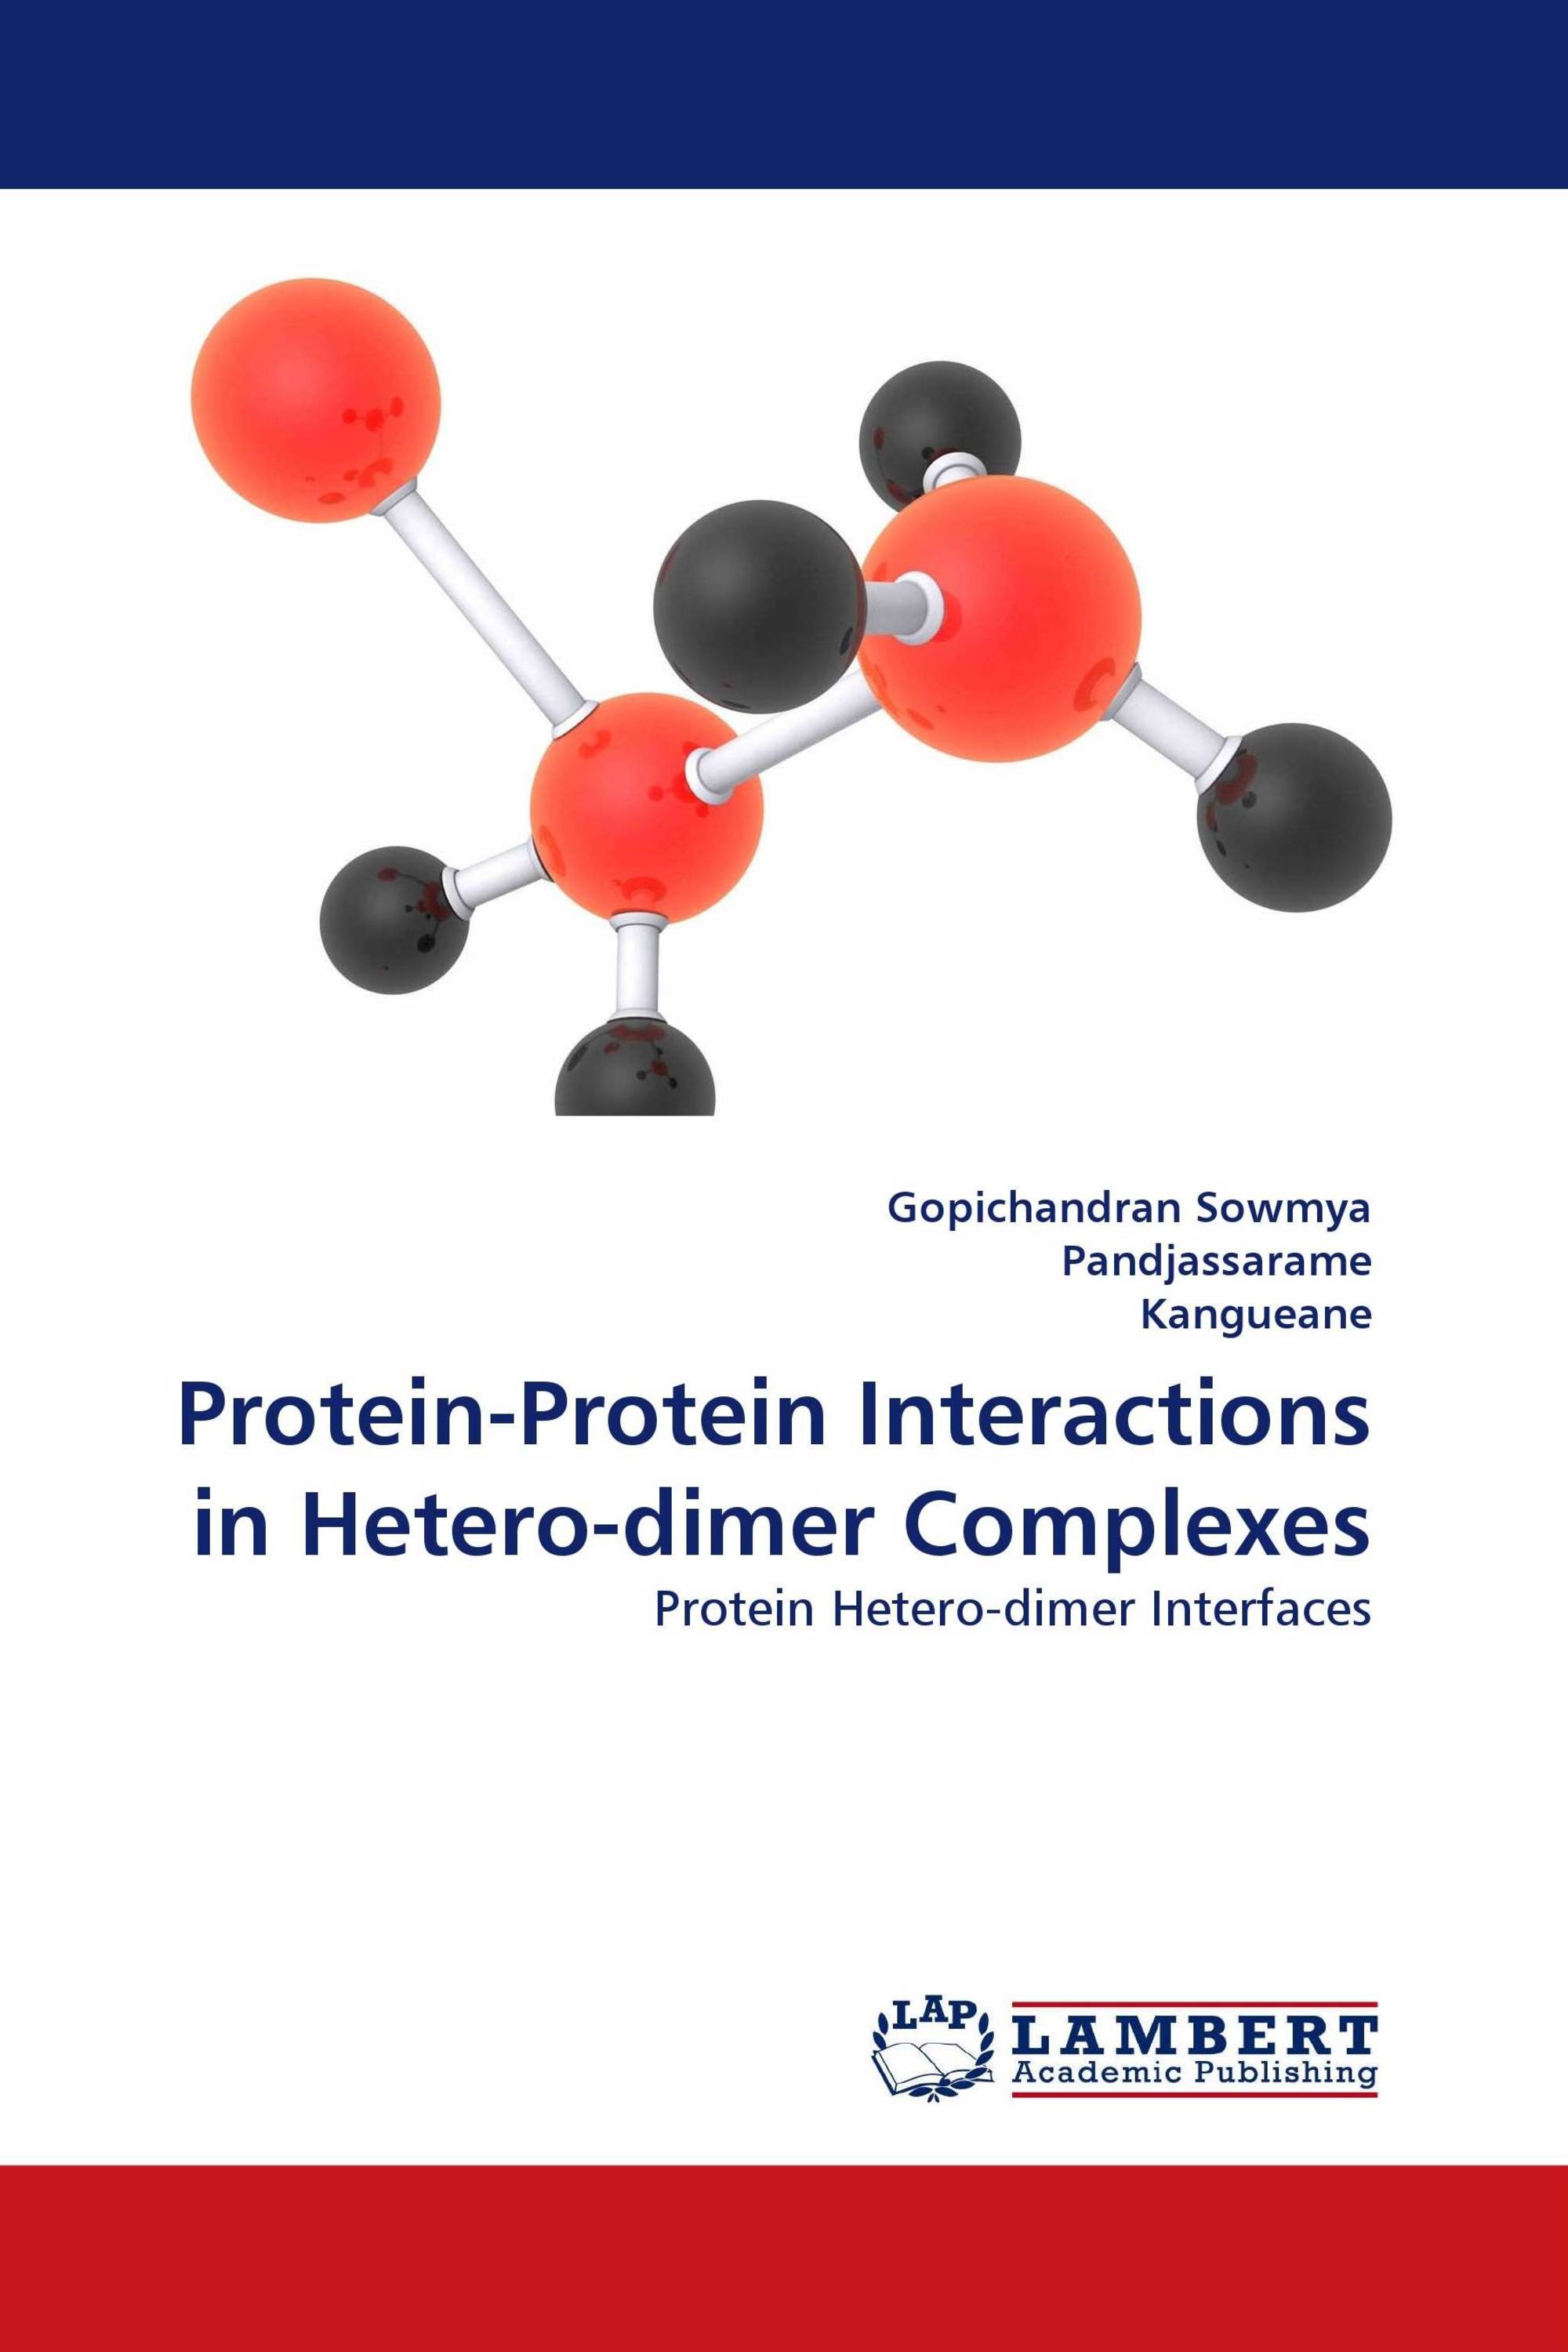 Protein-Protein Interactions in Hetero-dimer Complexes